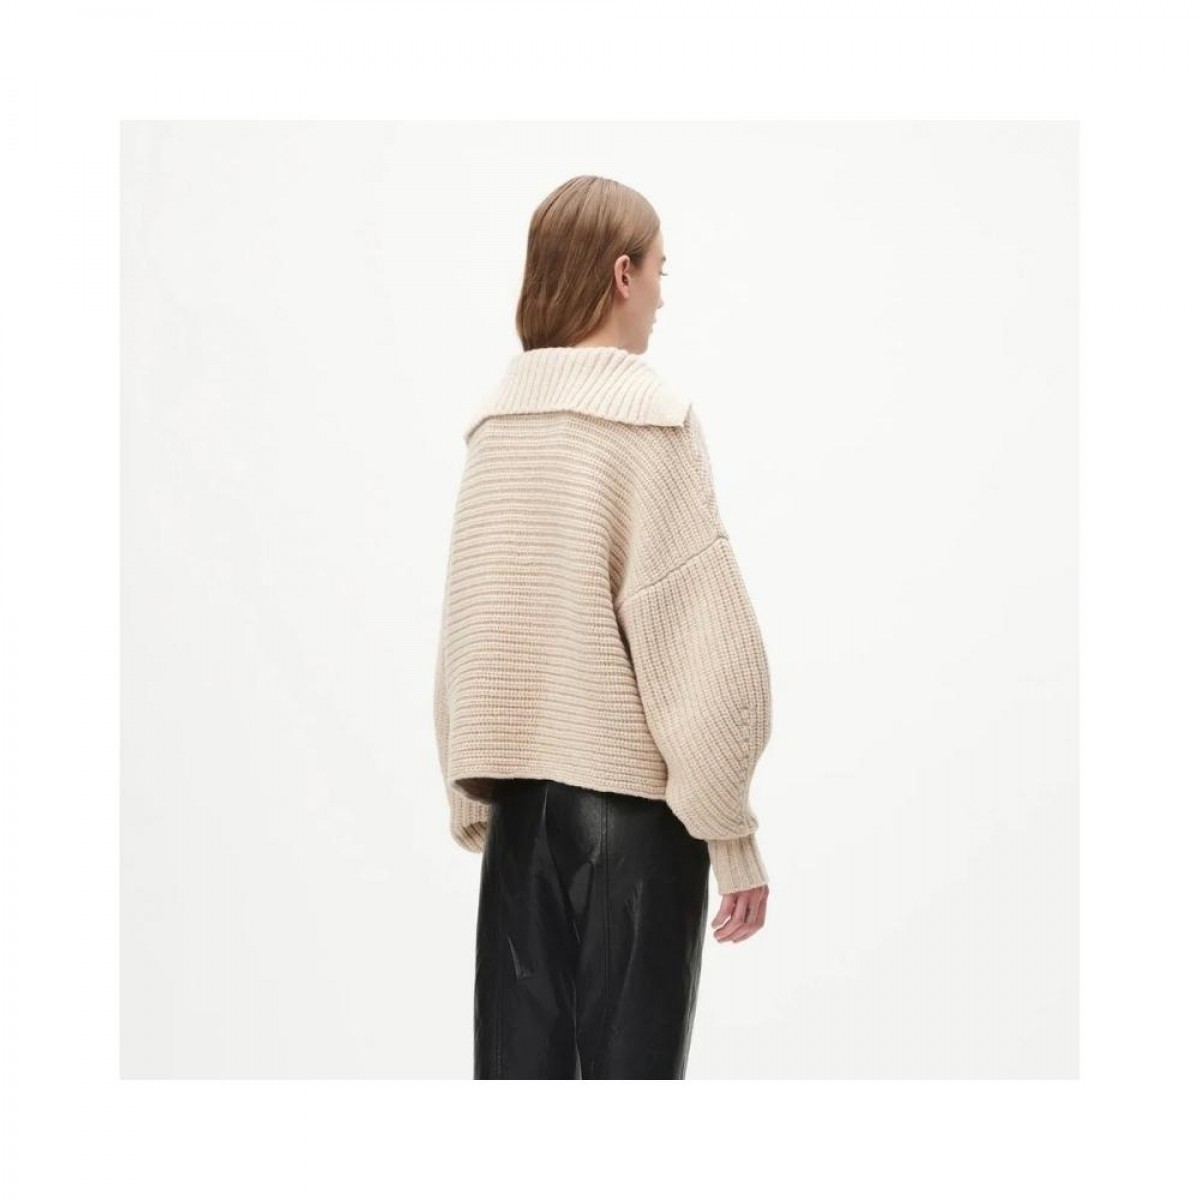 troyer koami knit - beige melange - model ryg